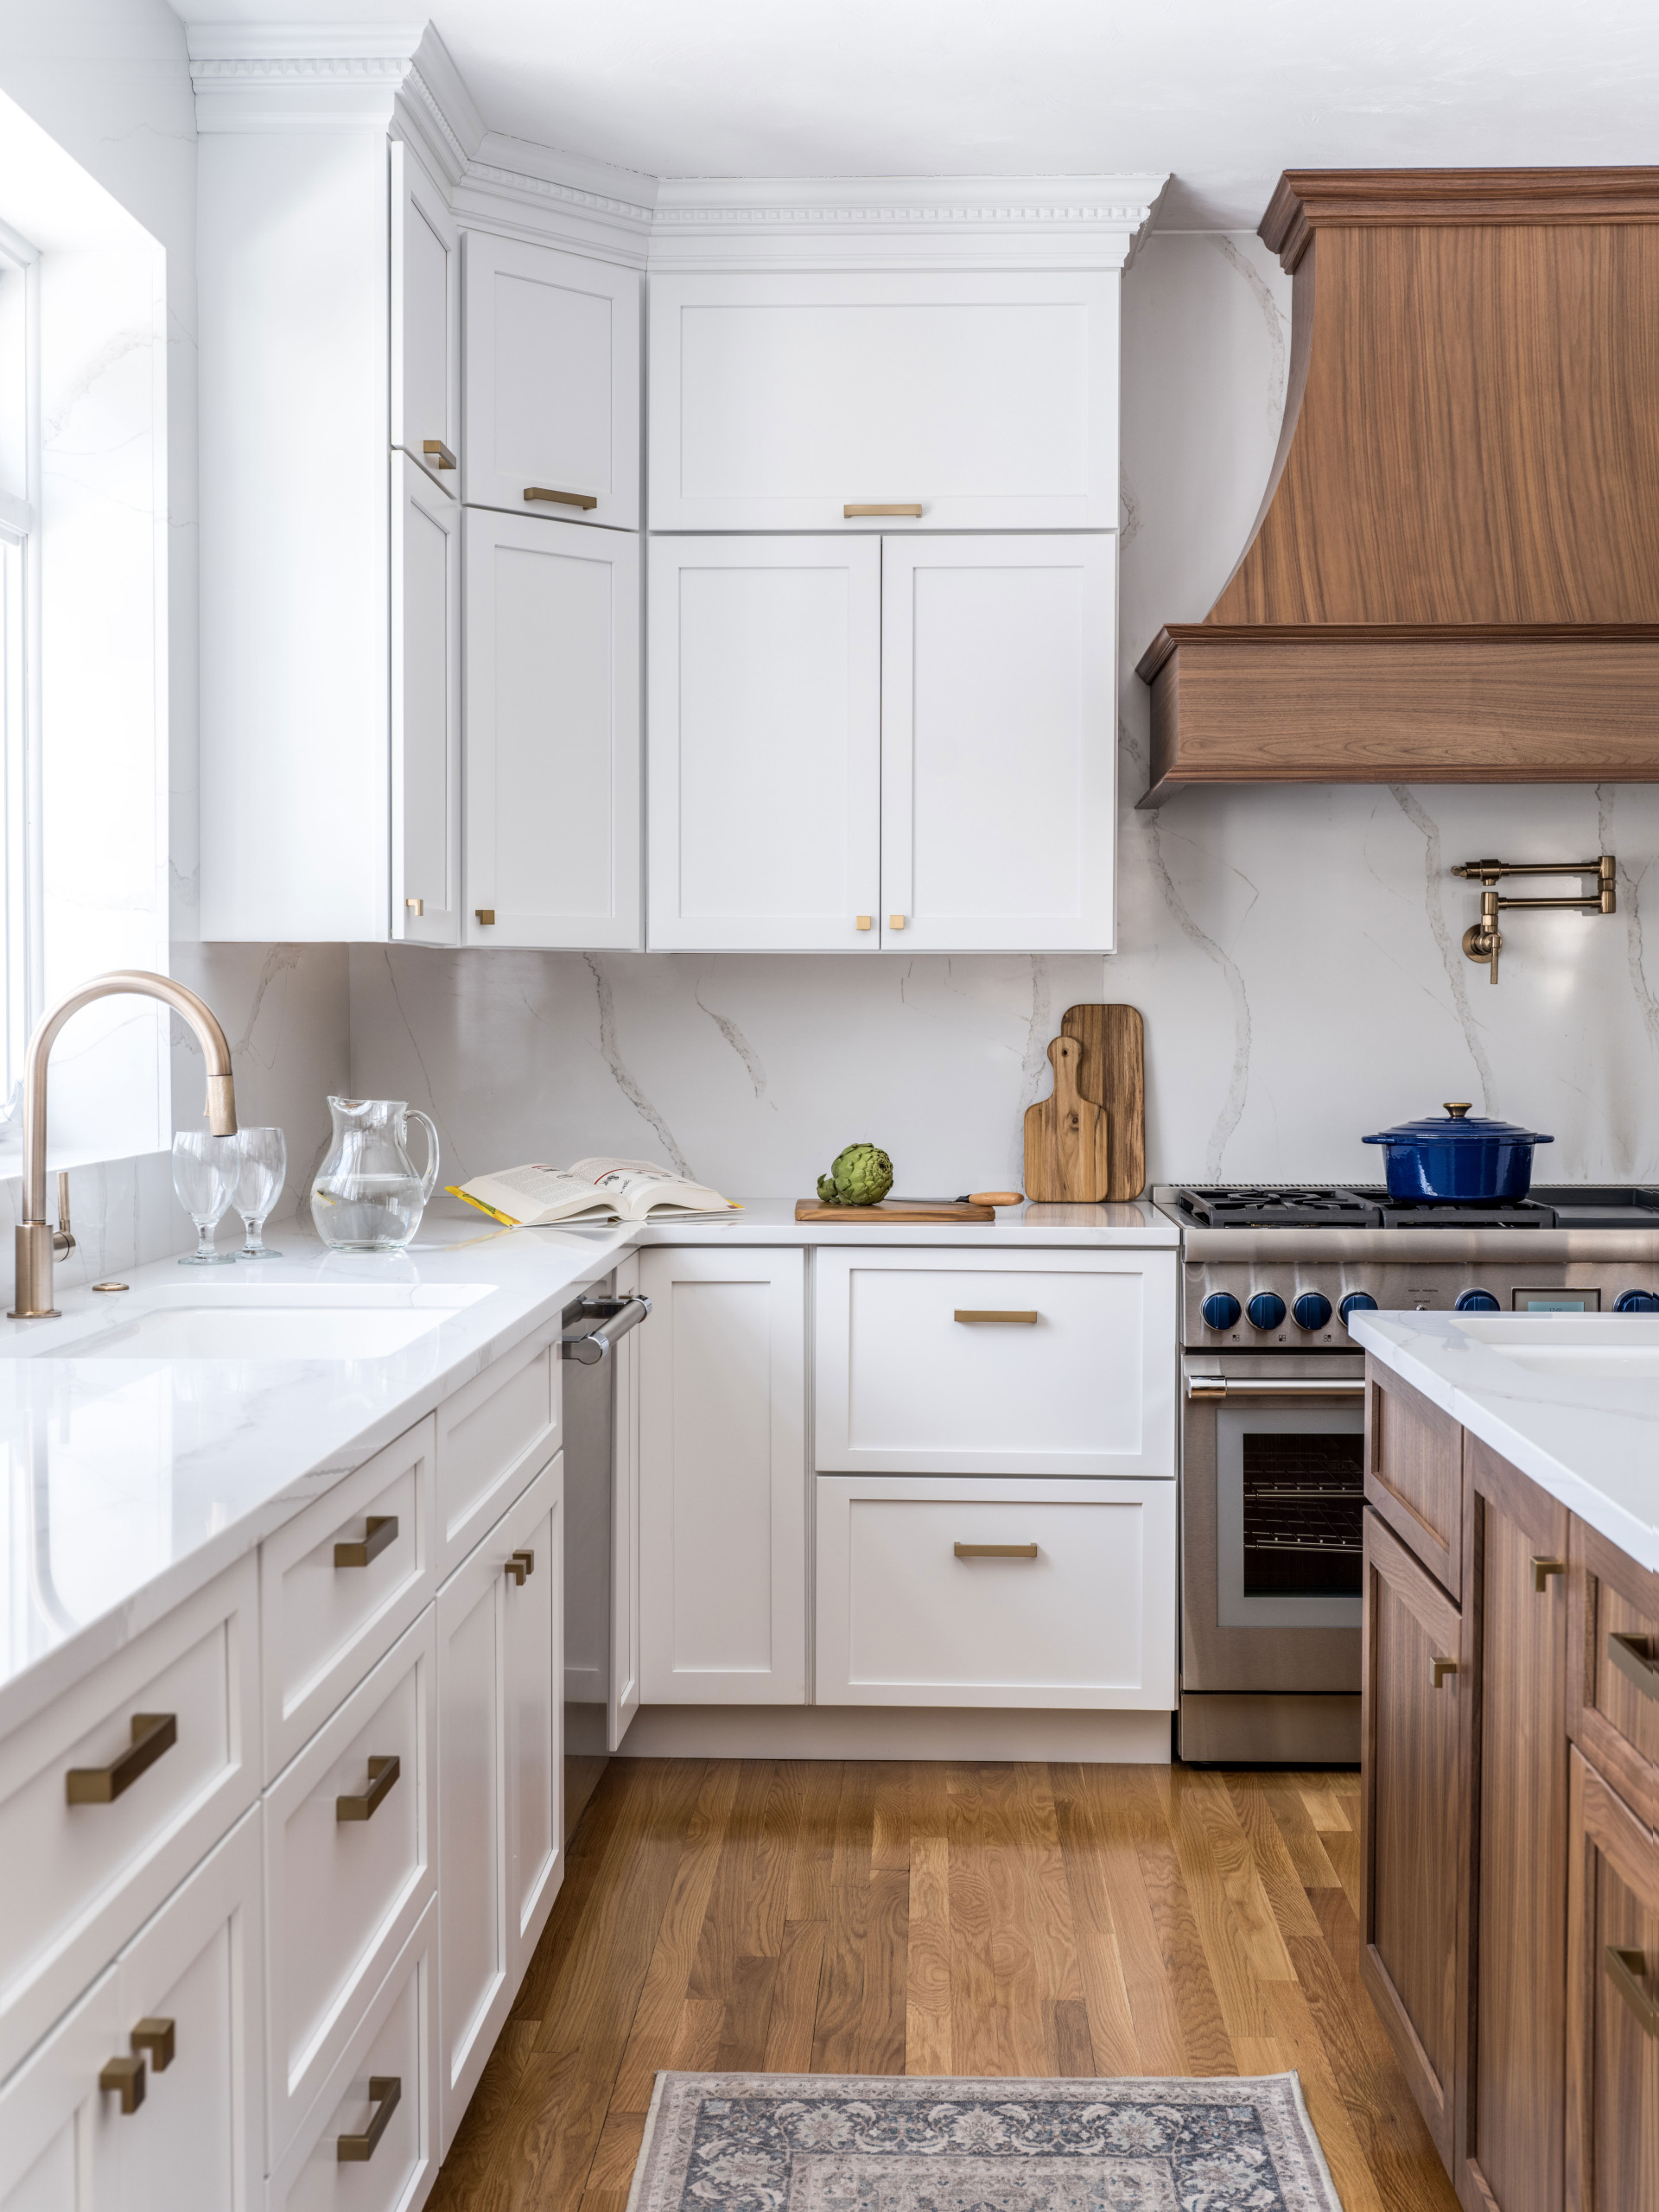 Light Blue Kitchen Cabinets with Brass Hardware - Transitional - Kitchen